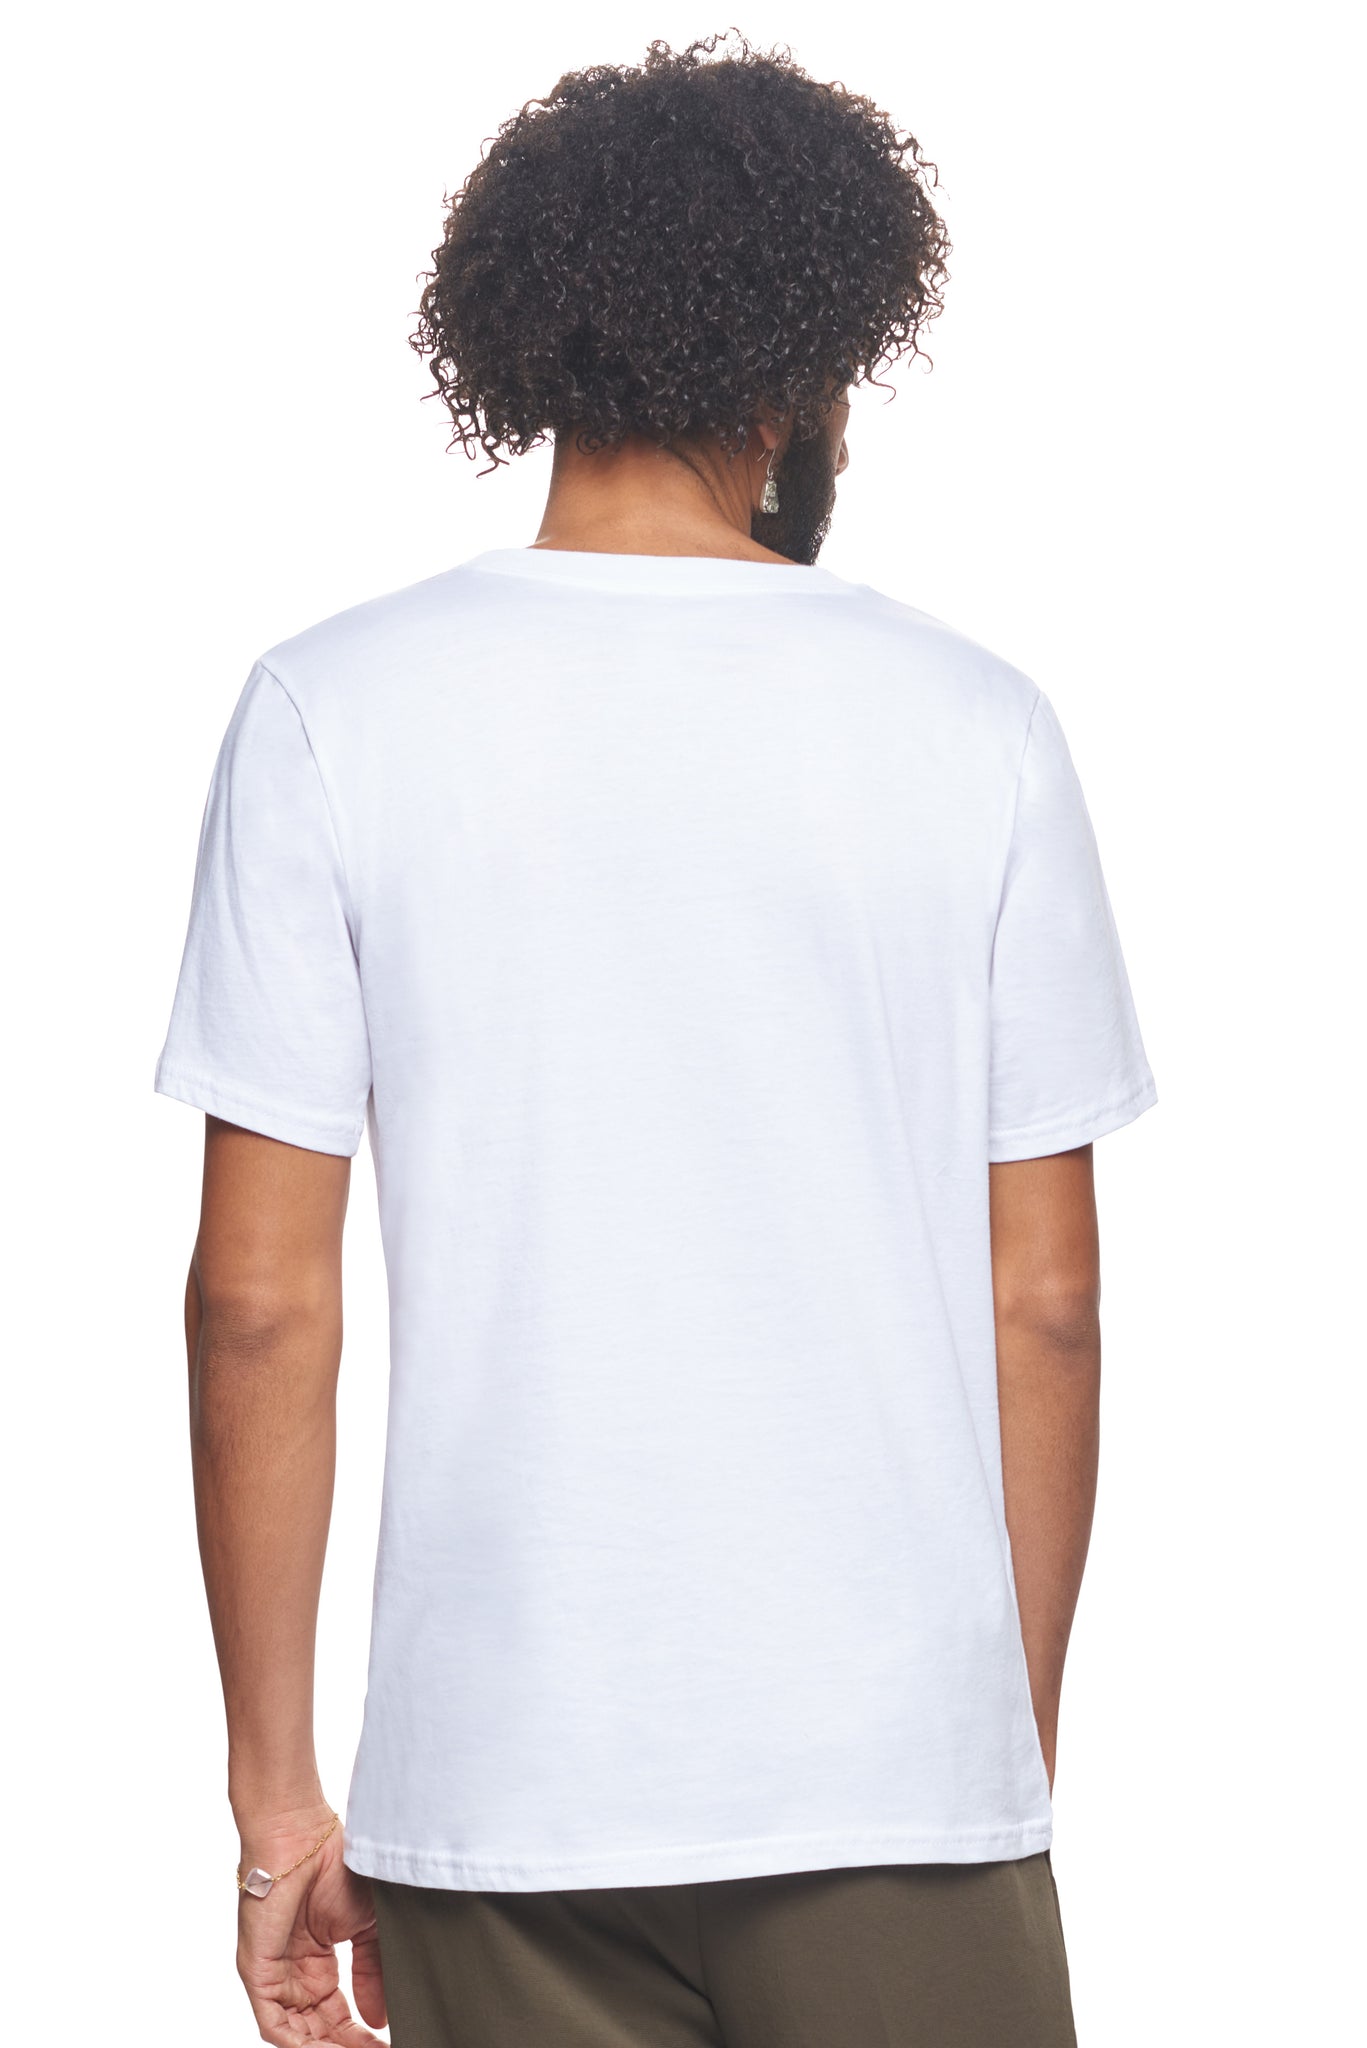 Organic Cotton Blank T-Shirts, Wholesale Organic Clothing